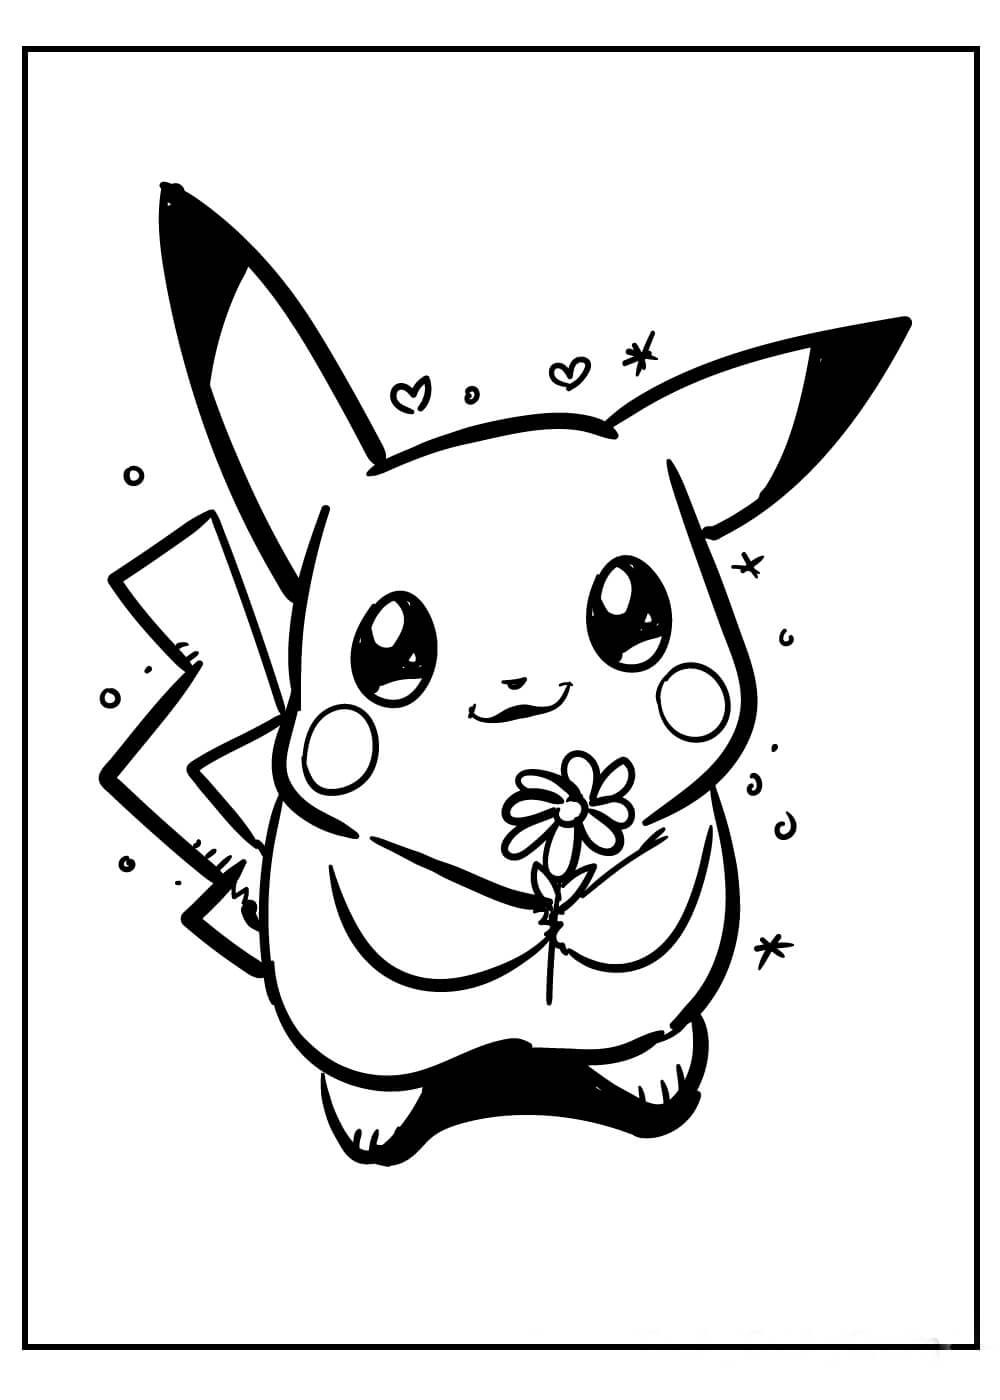 Pikachu sosteniendo Flor